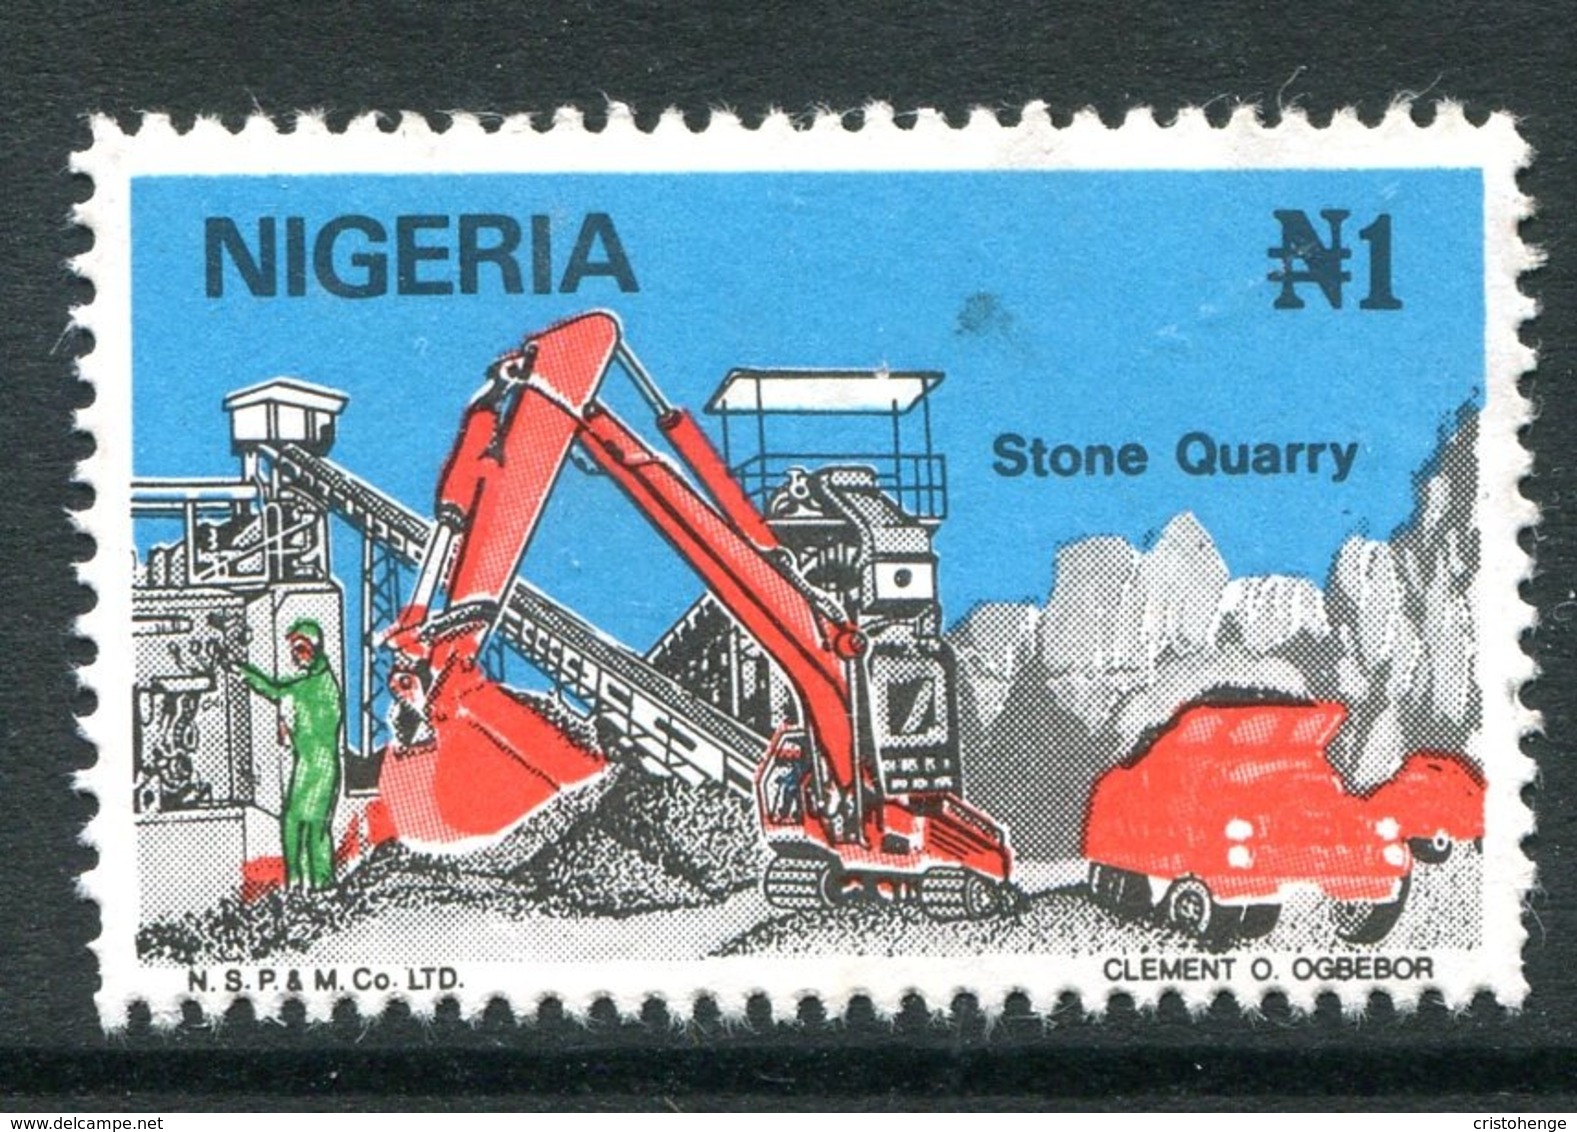 Nigeria 1986-98 Nigerian Life - 1n Stone Quarry MNH (SG 524) - Nigeria (1961-...)